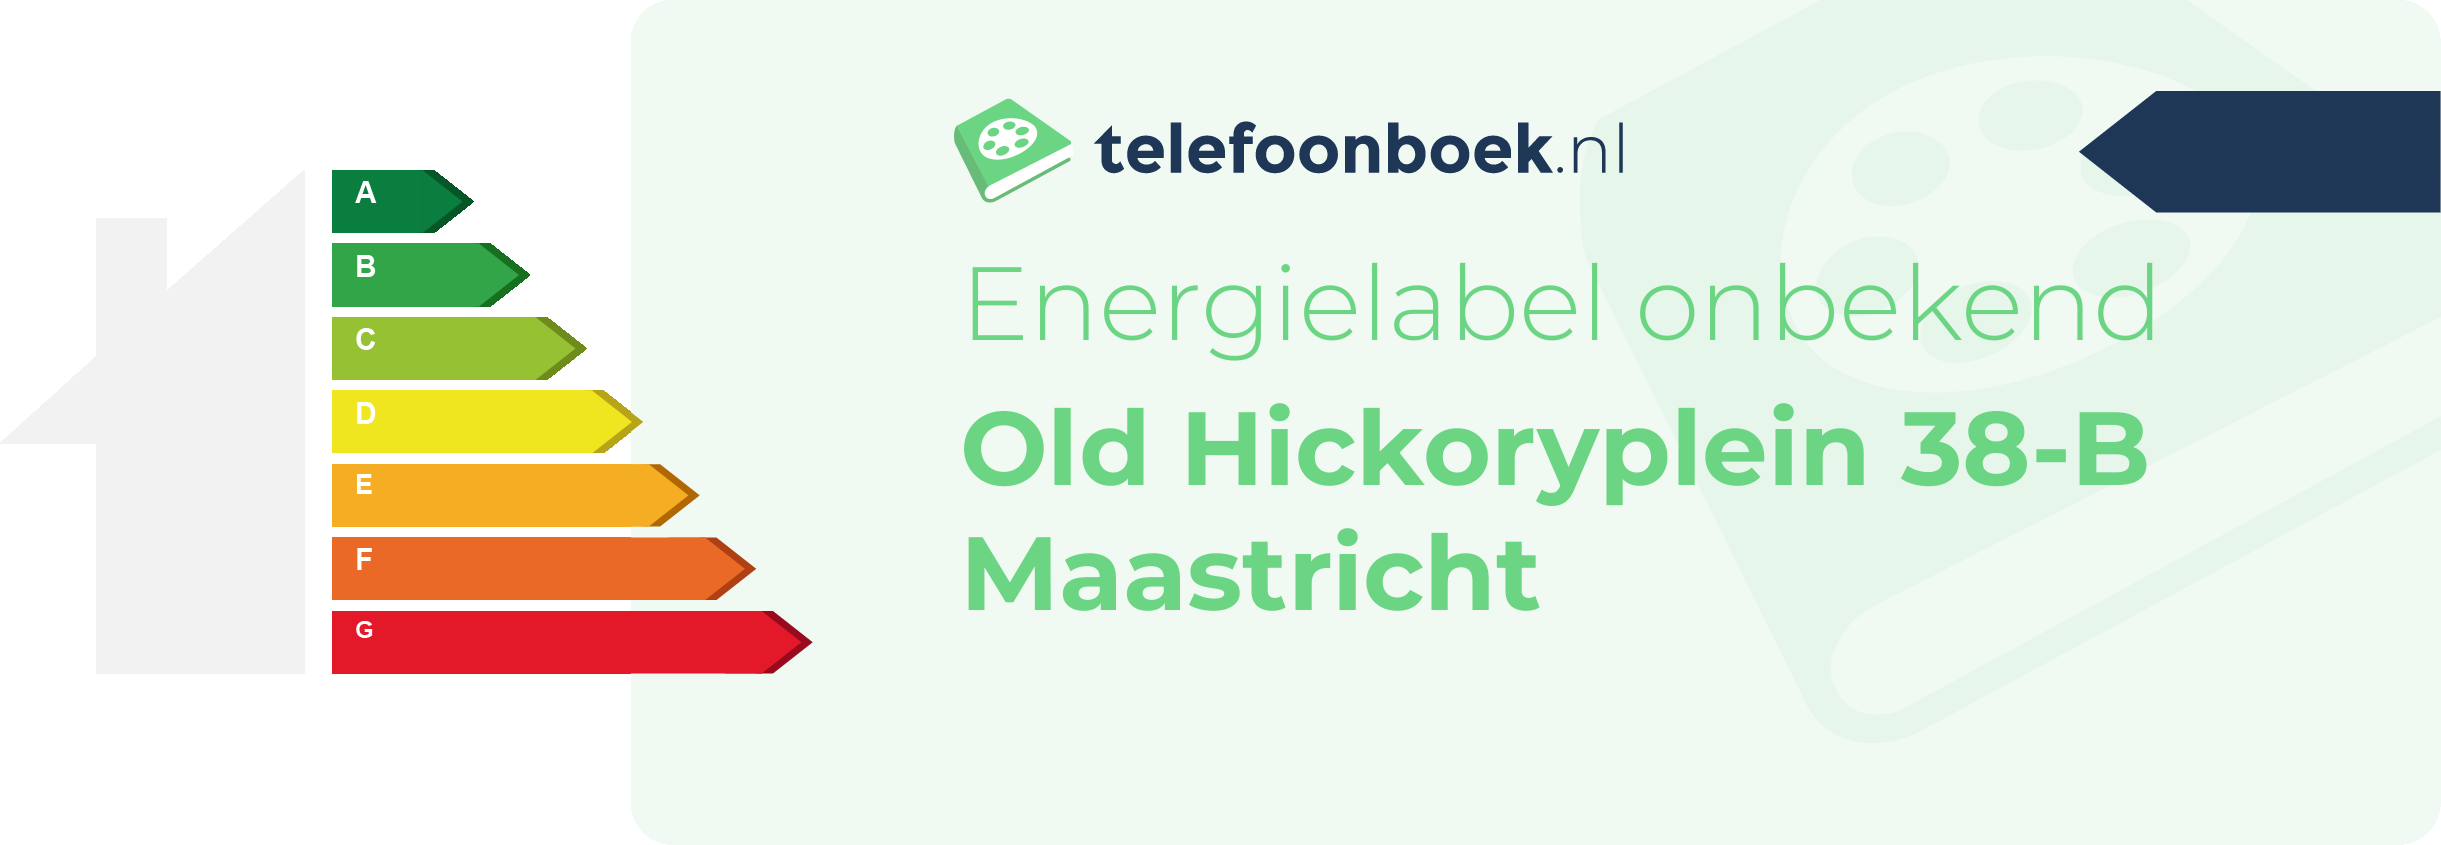 Energielabel Old Hickoryplein 38-B Maastricht